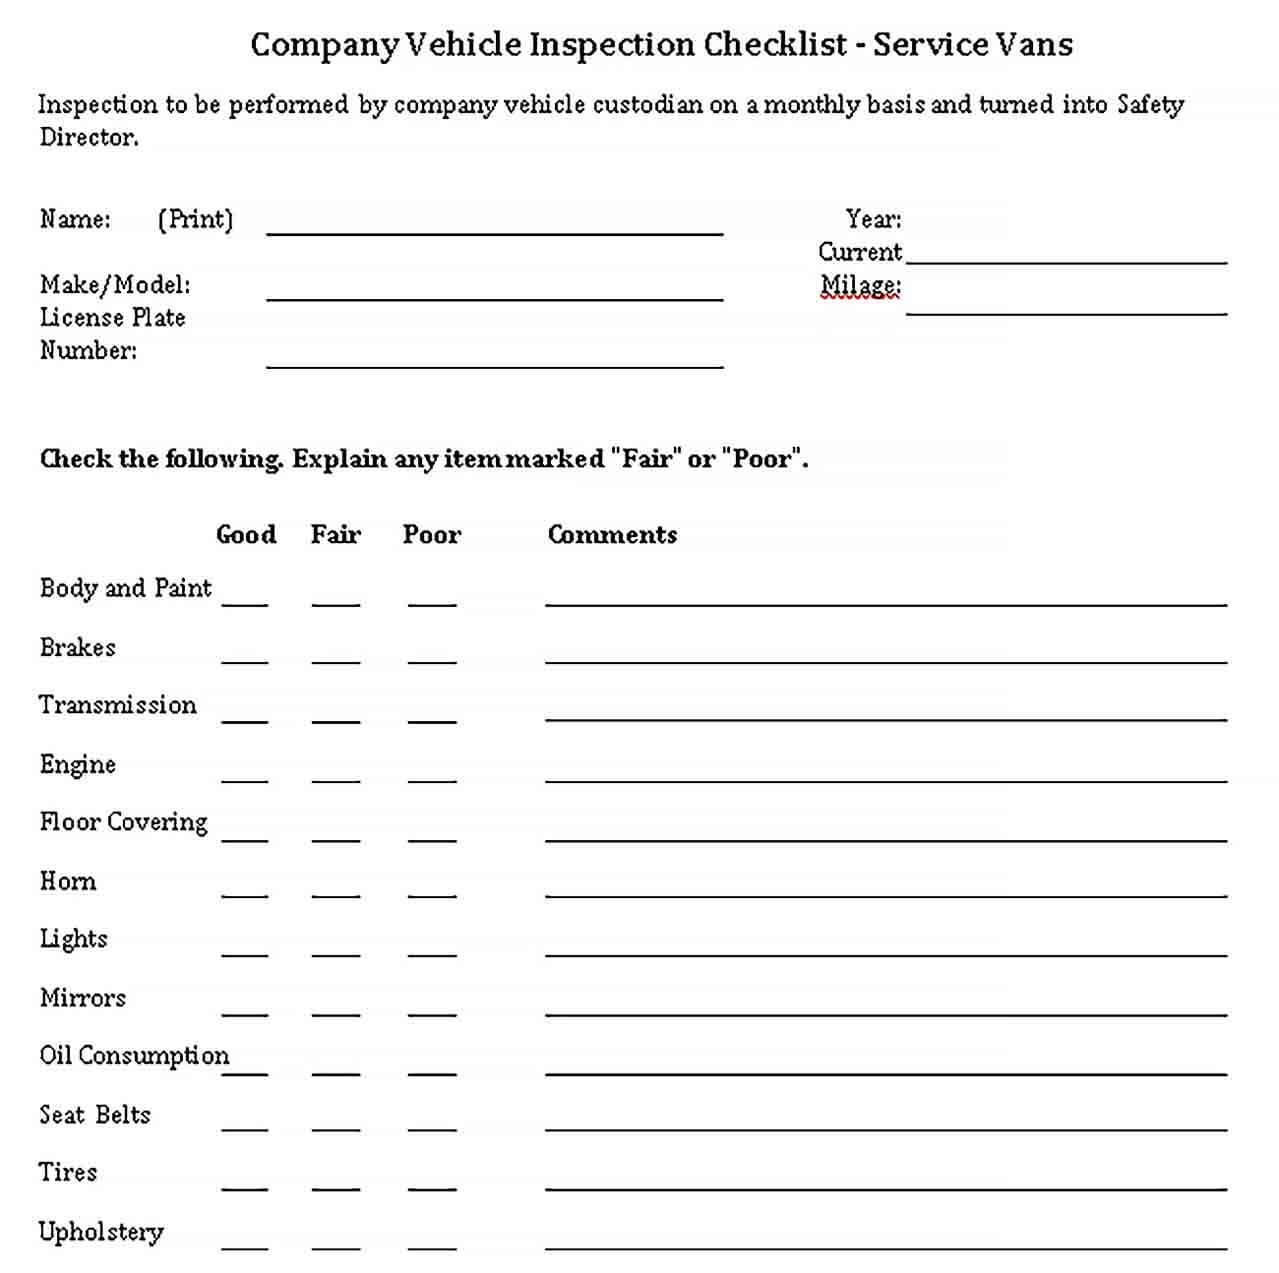 Sample Company Vehicle Checklist